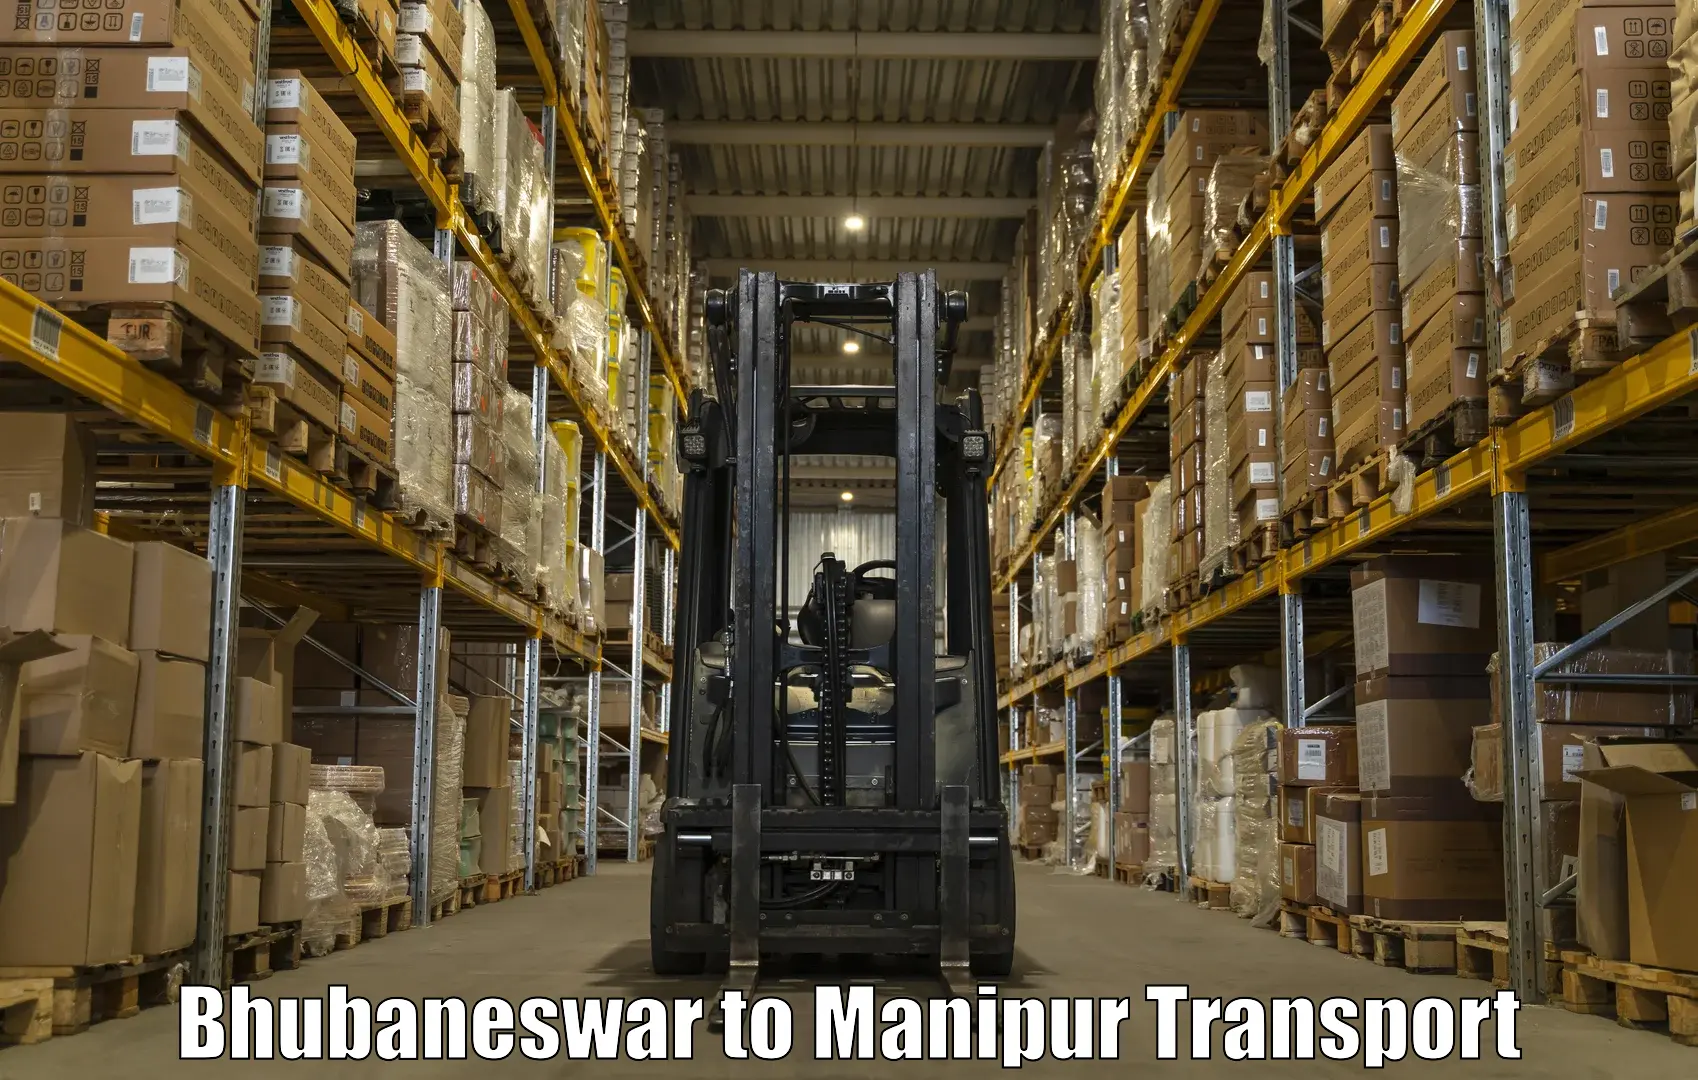 Truck transport companies in India Bhubaneswar to Manipur